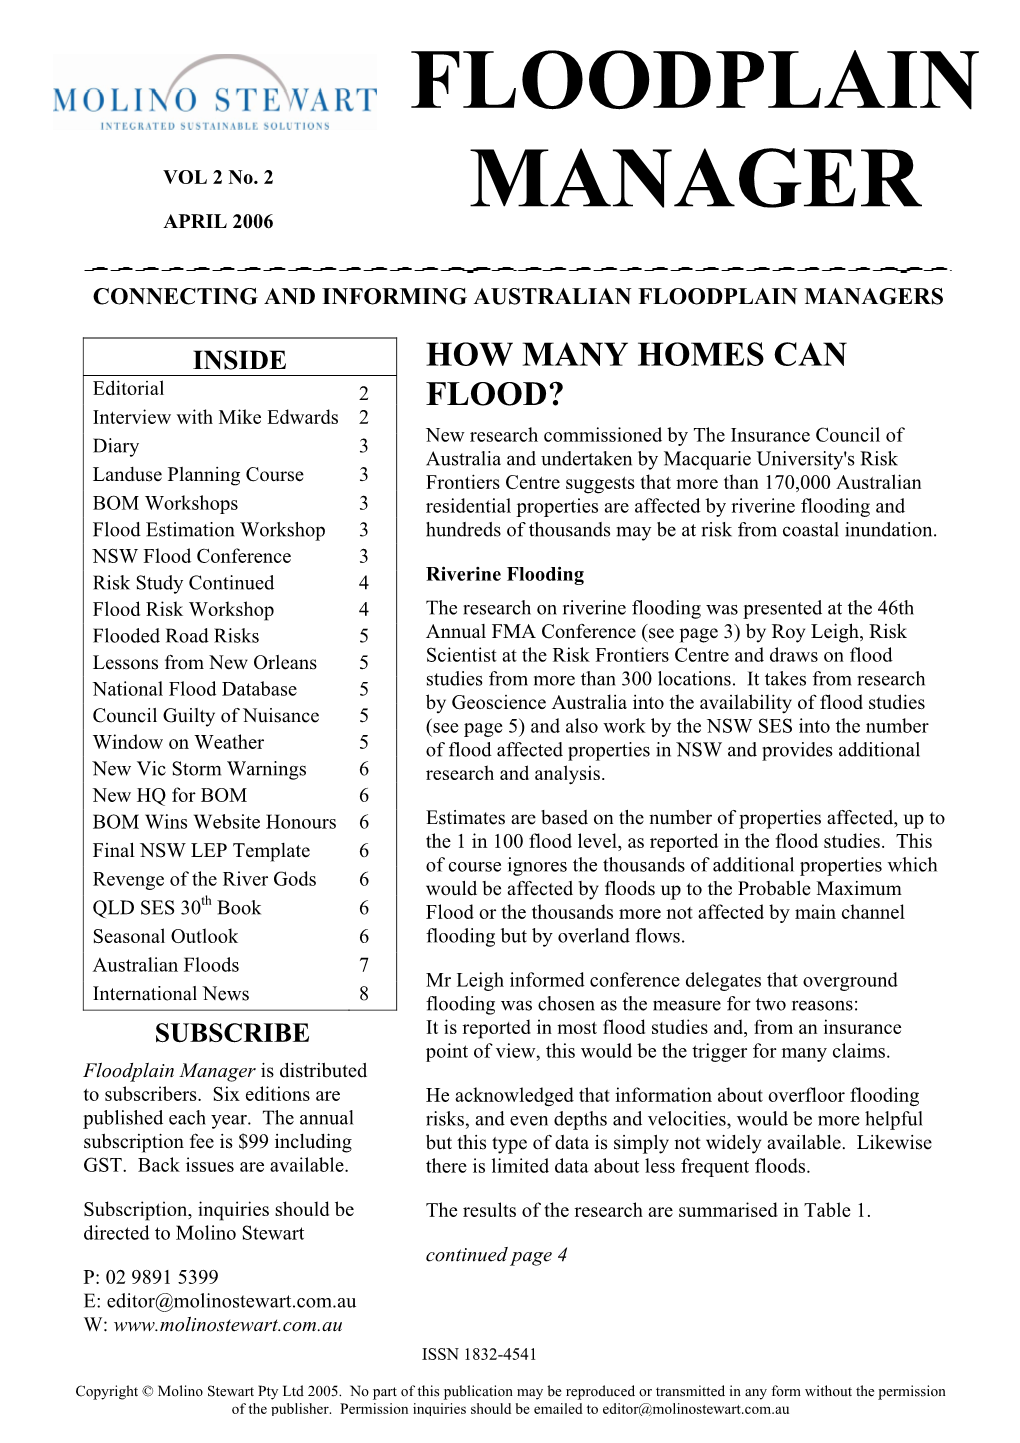 Floodplain Managers